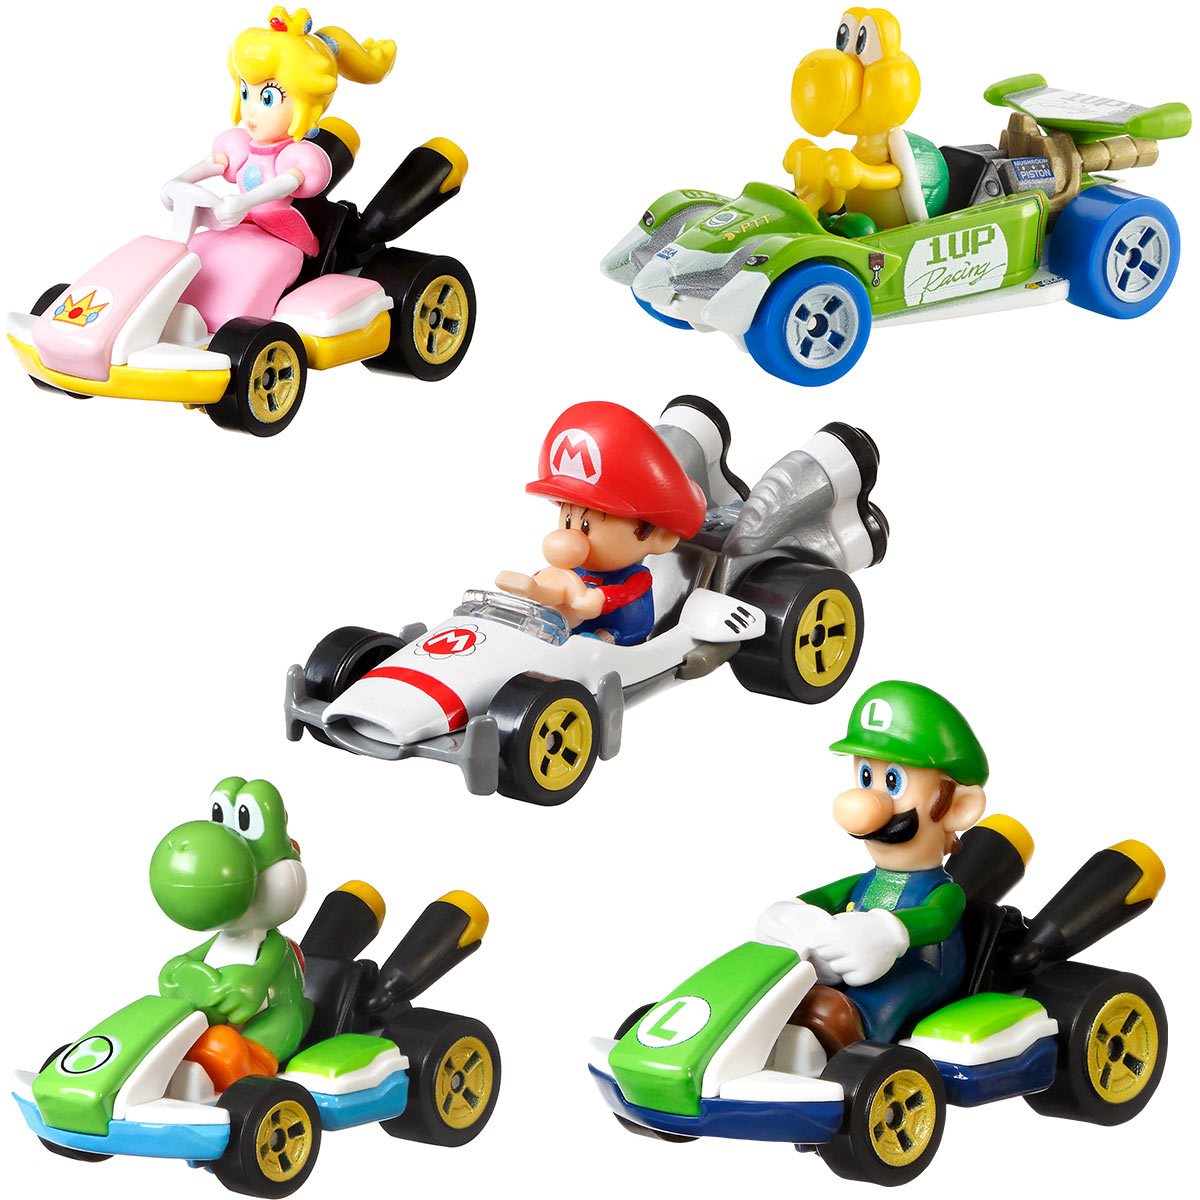  Hot Wheels Mario Kart Luigi Circuit Special 1UP Racer